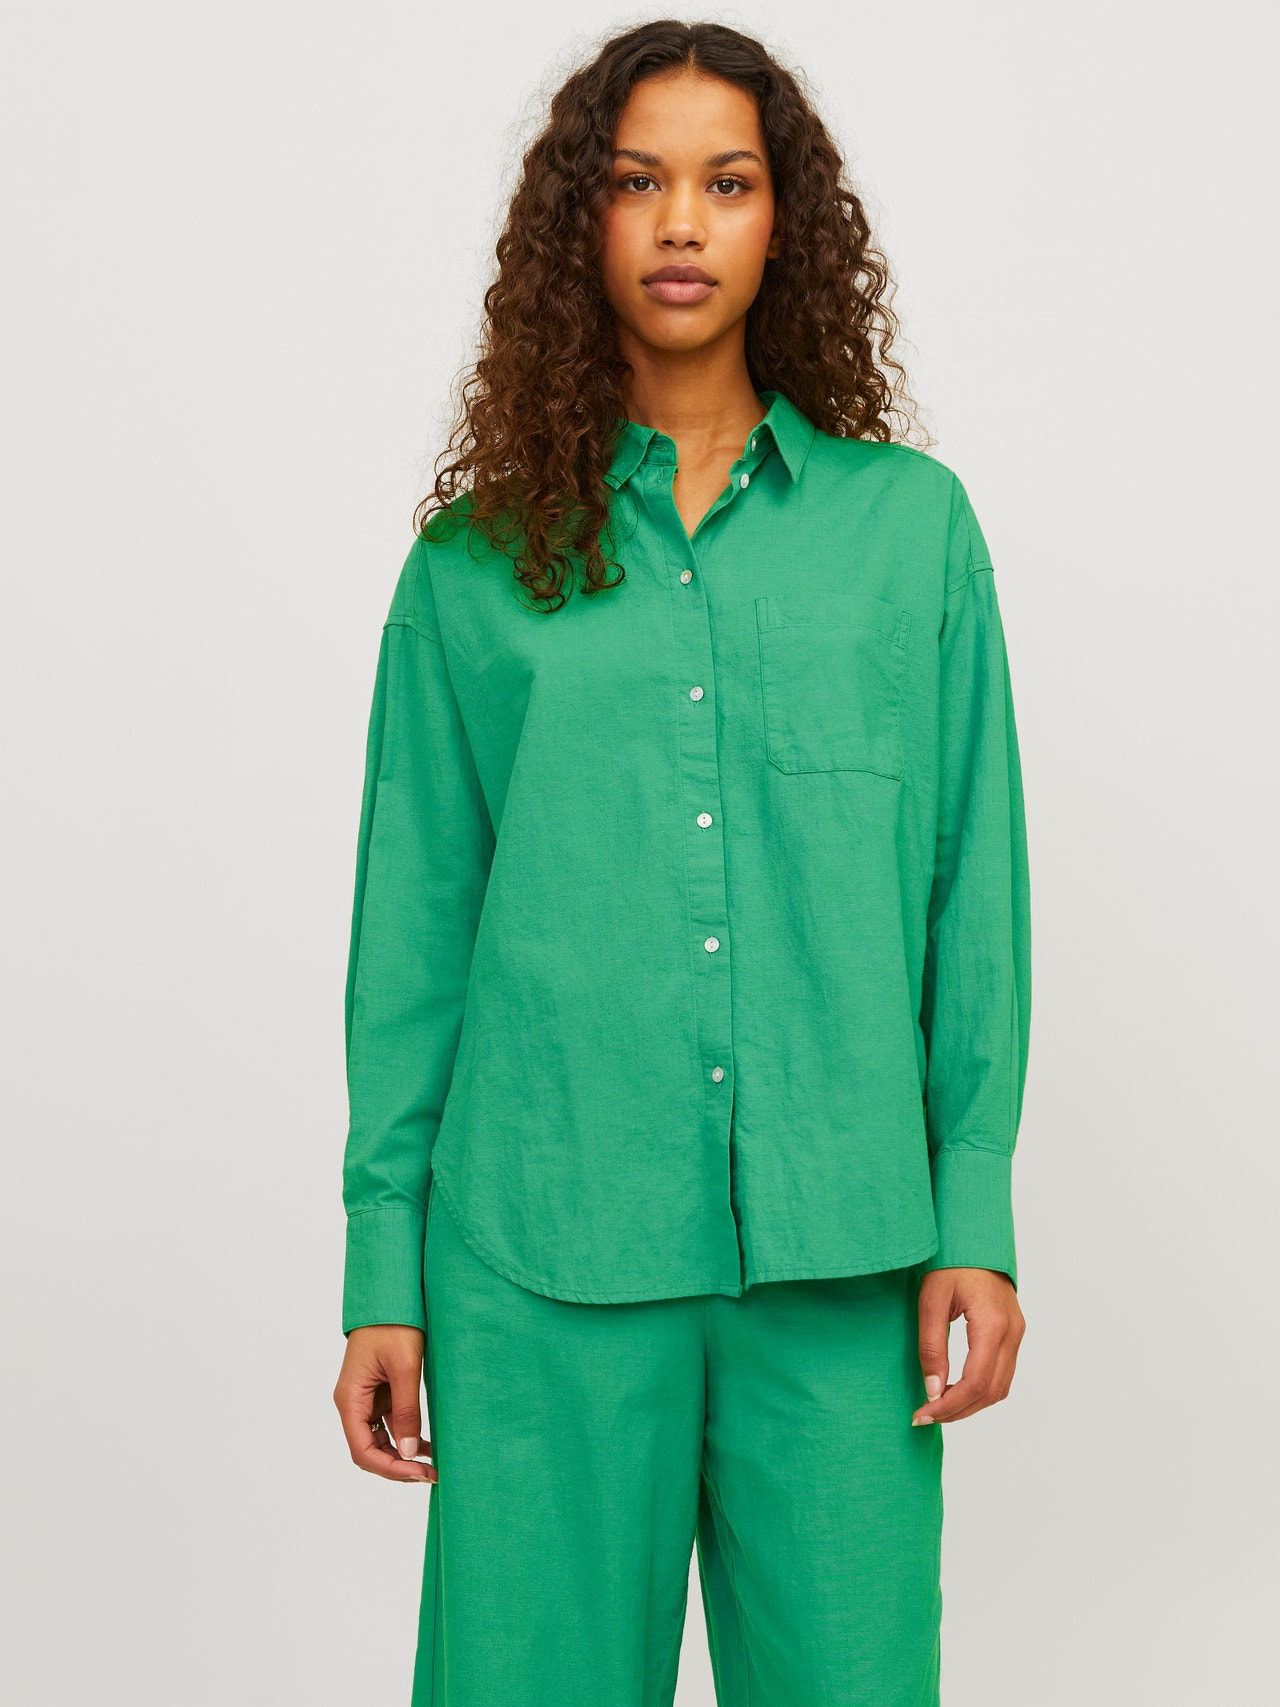 JJXX JXJAMIE Casual shirt -Medium Green - 12231340